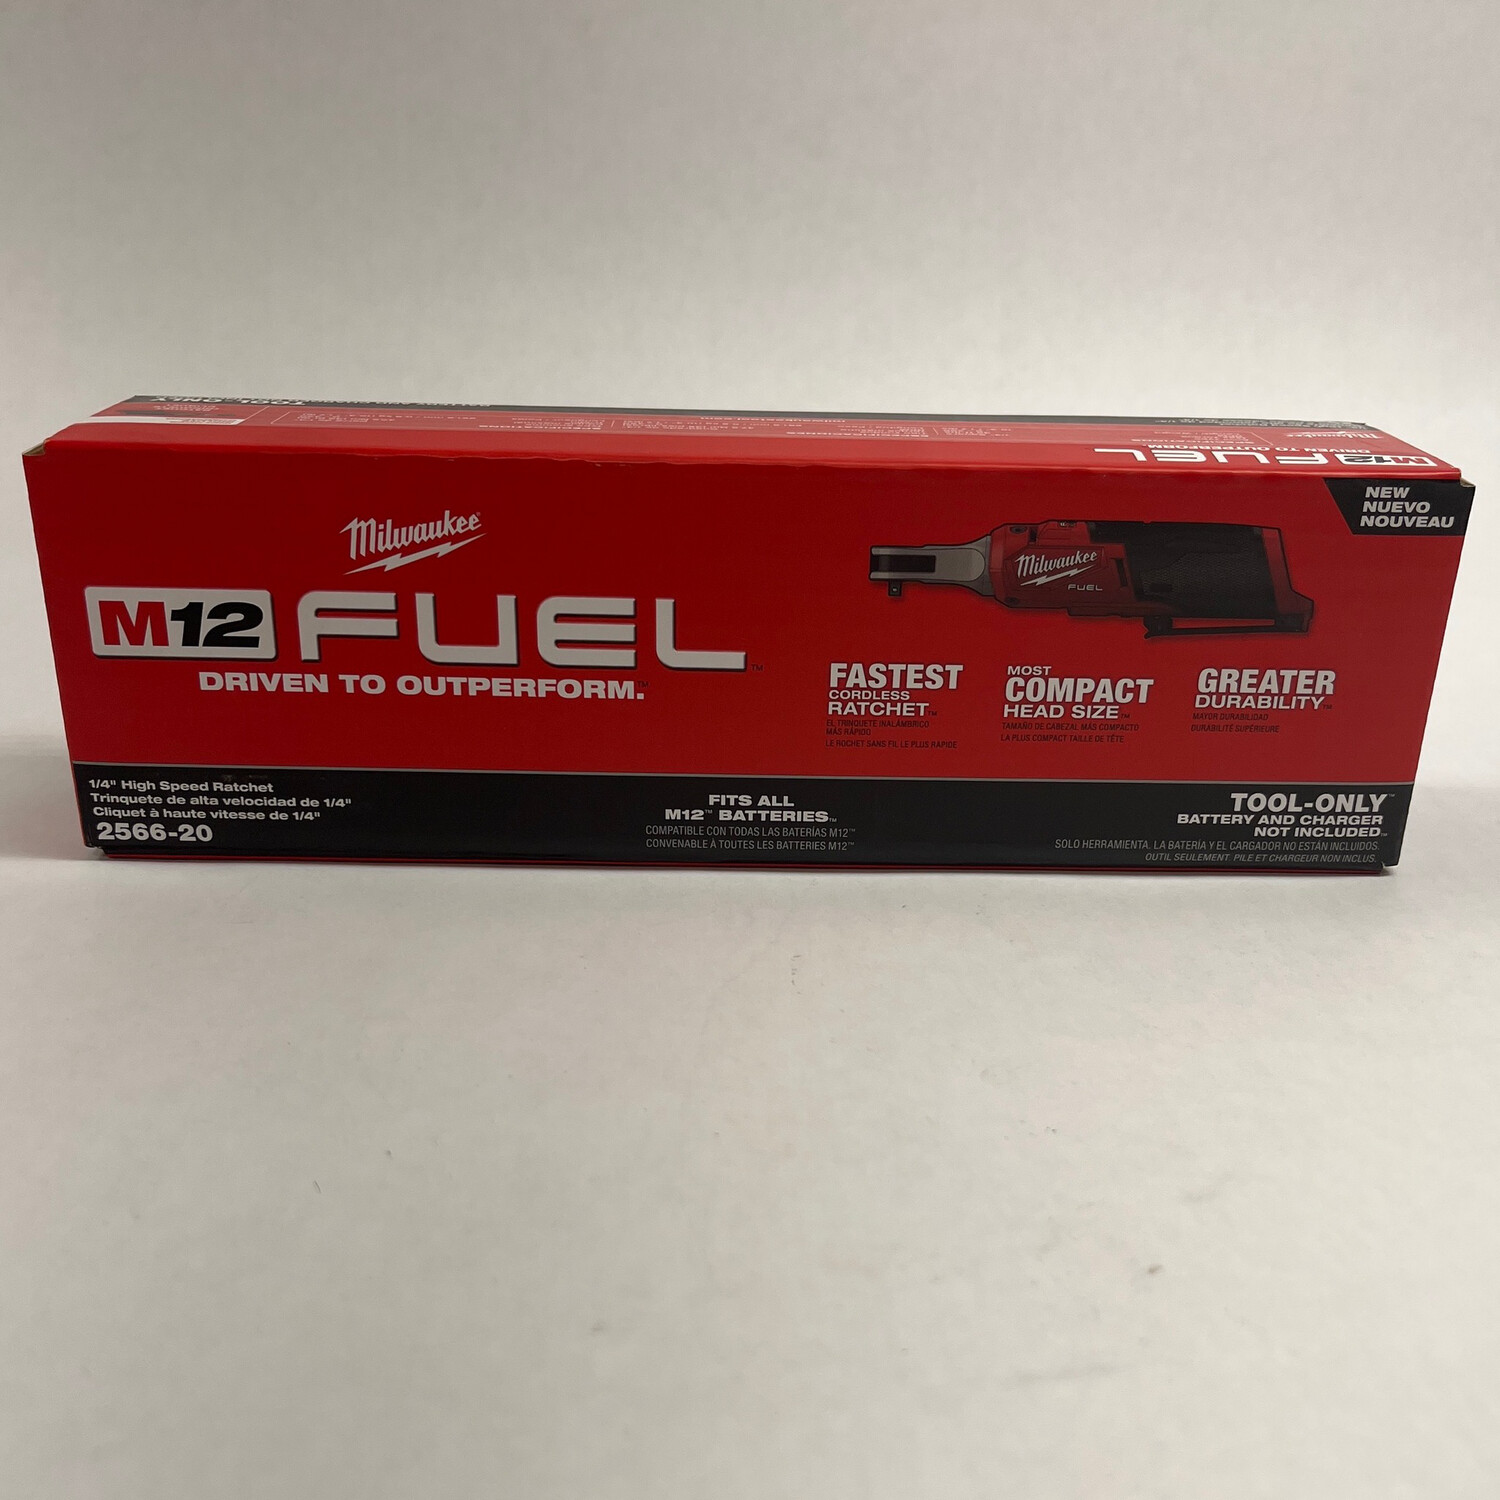 Milwaukee M12 Fuel 1/4” Drive High Speed Ratchet, 2566-20